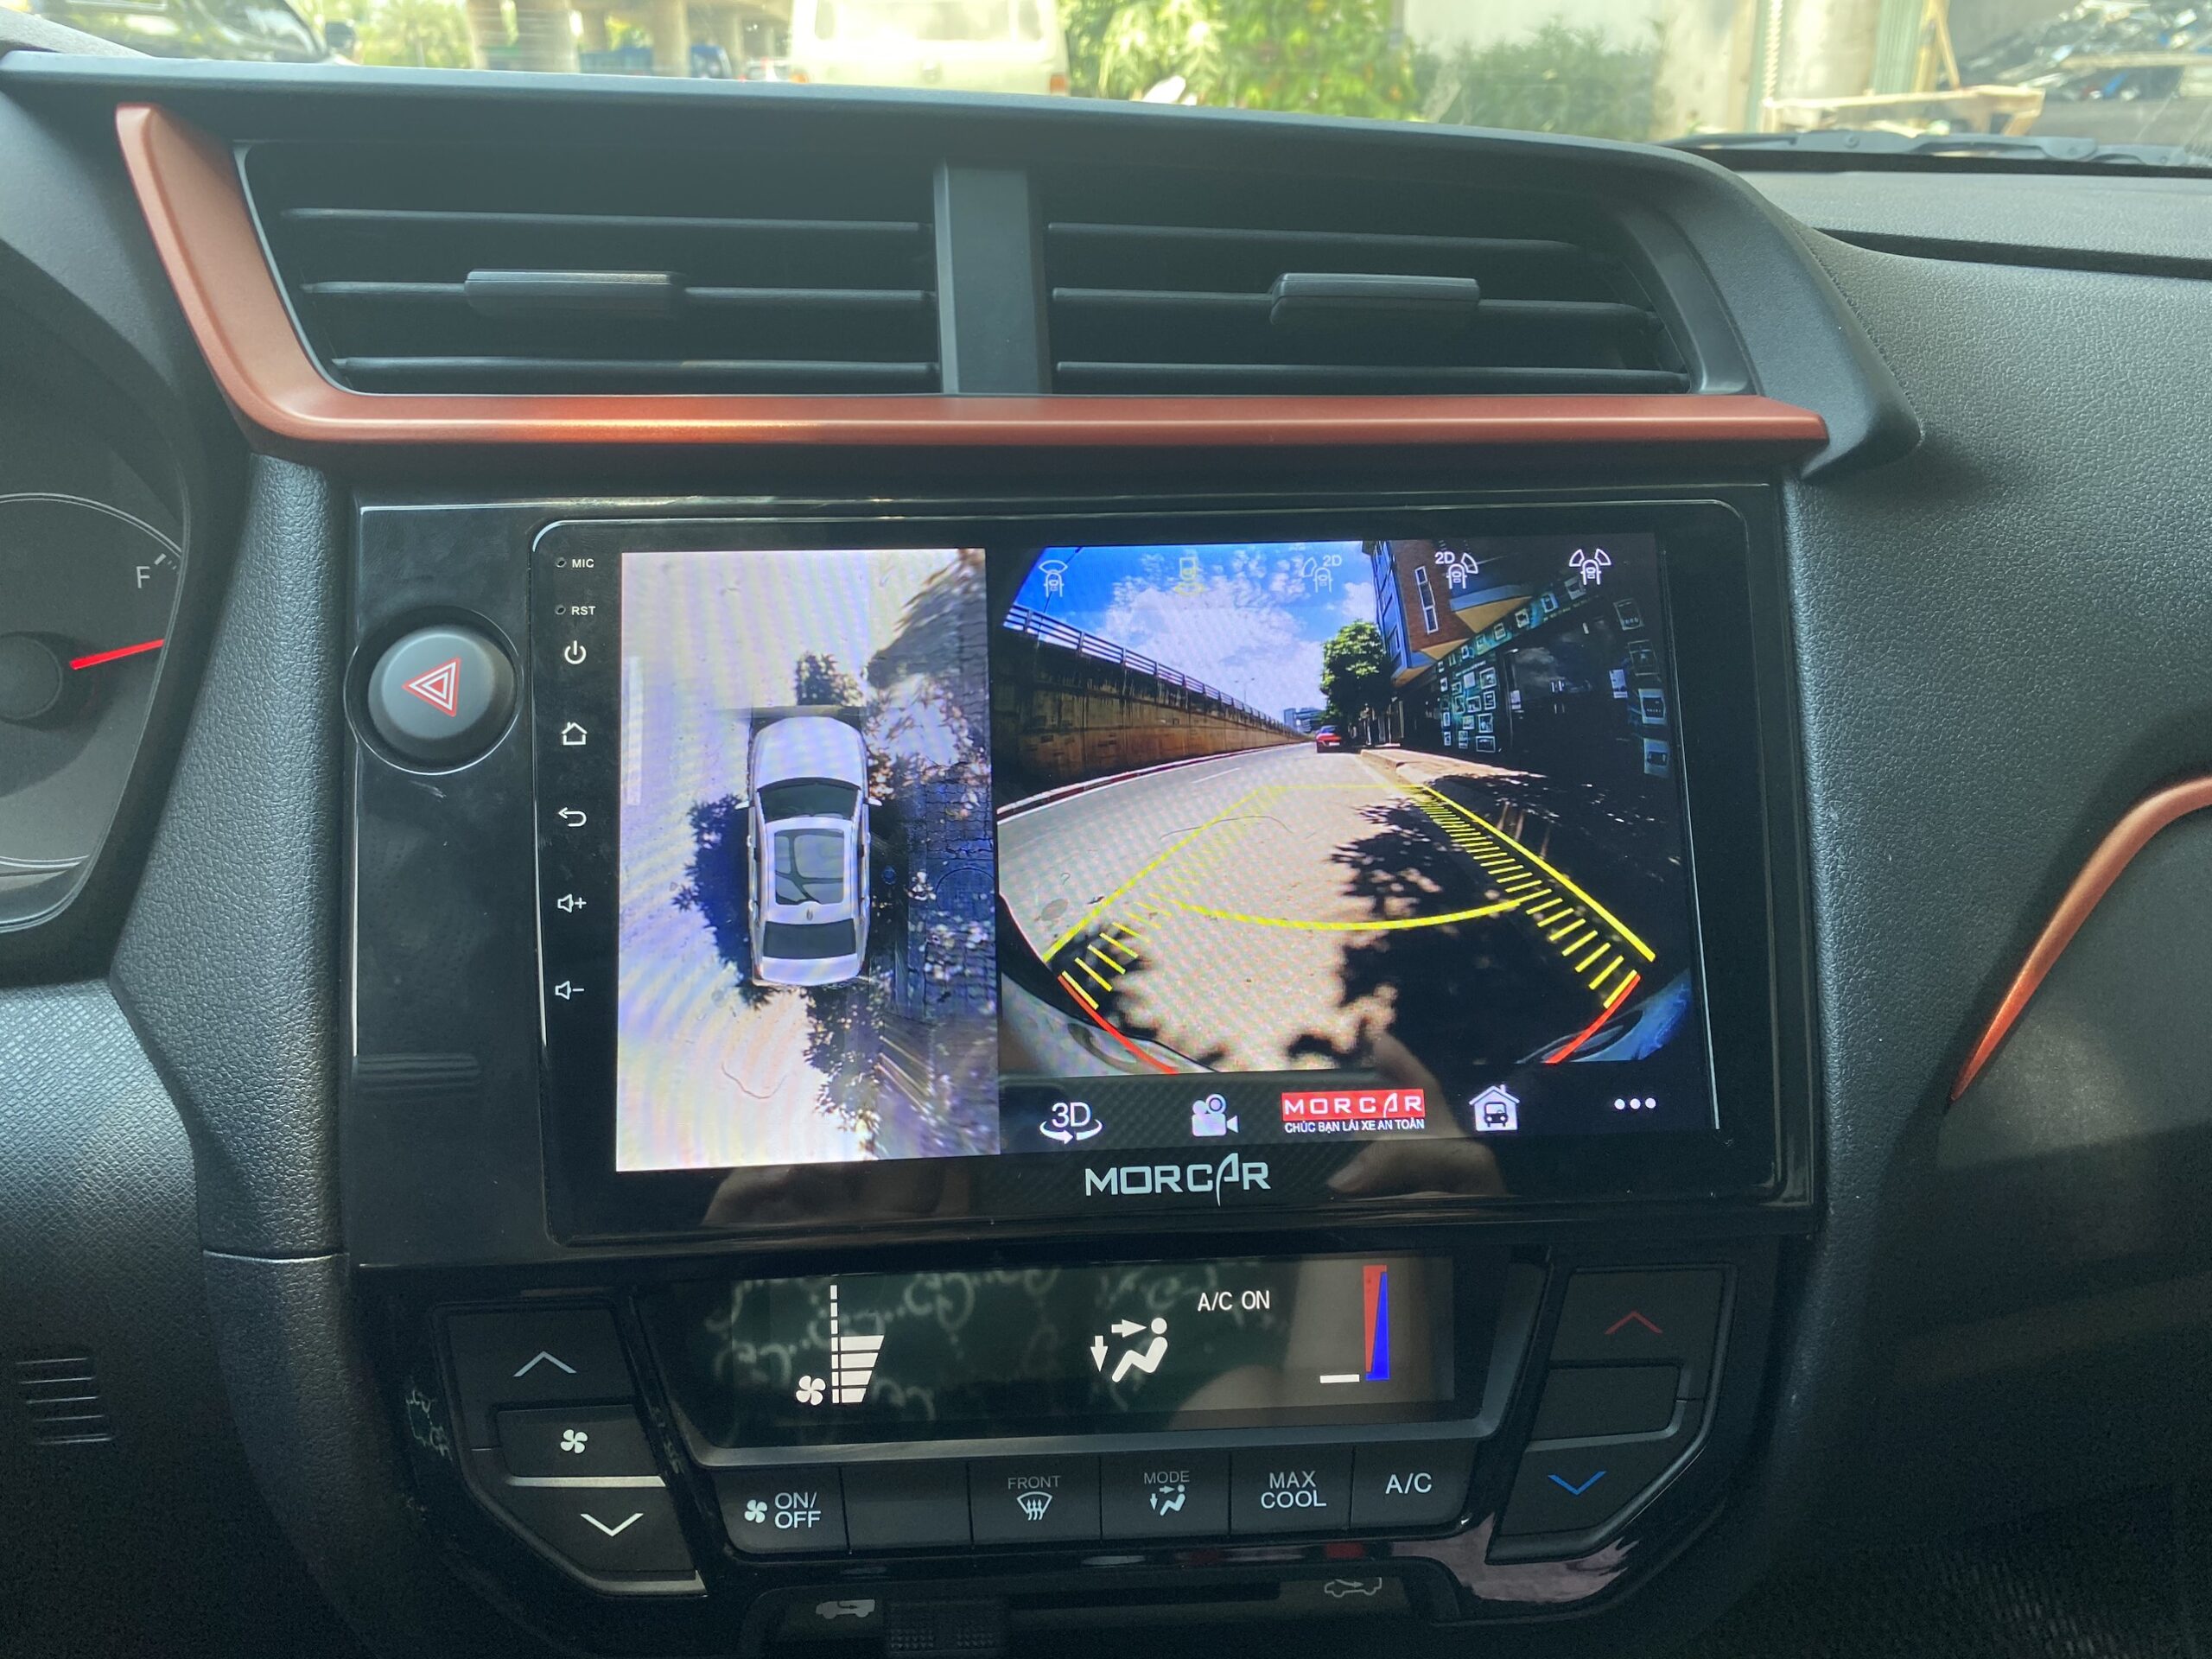 camera 360 cho xe honda brio 2